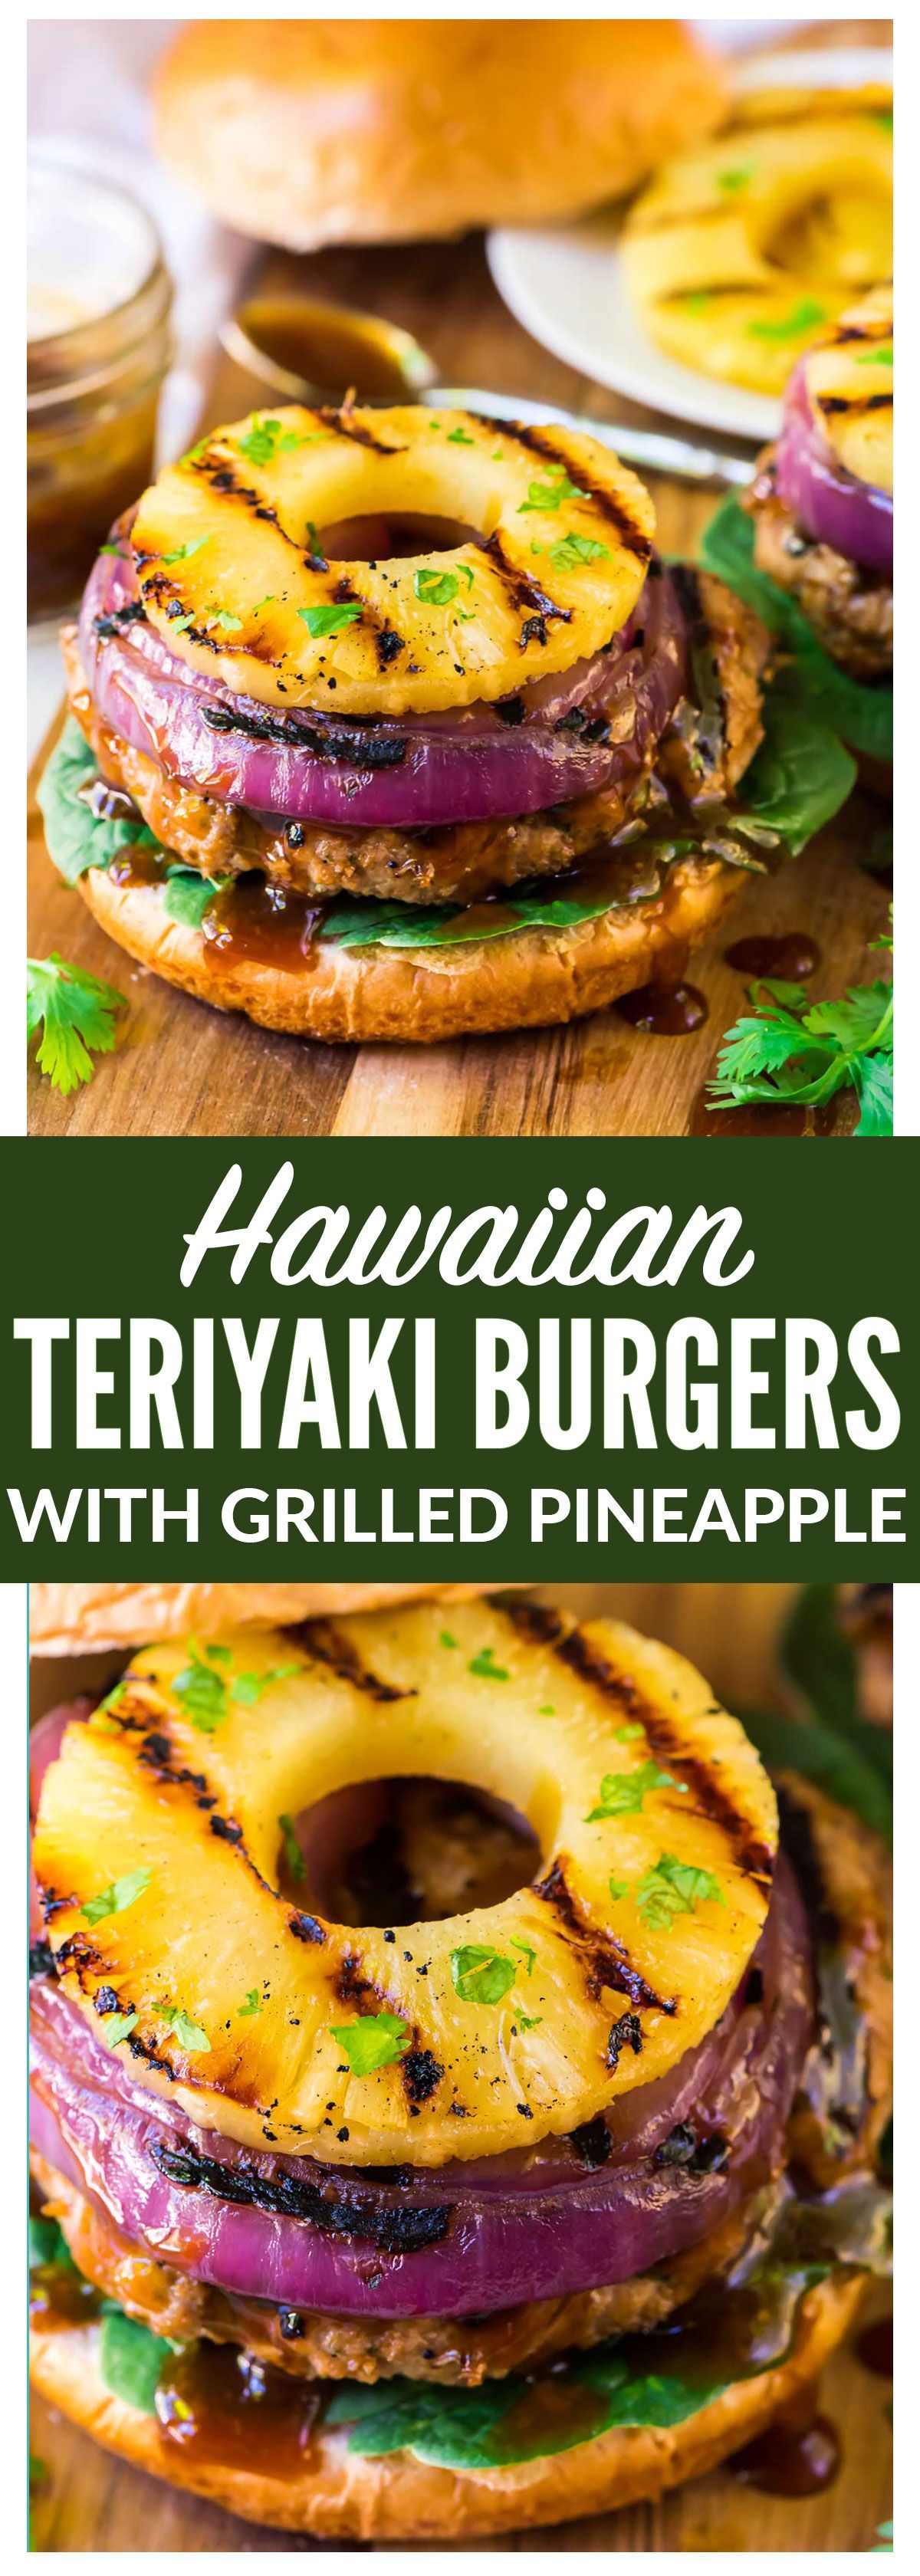 Hawaiian Teriyaki Burgers with Grilled Pineapple and Onion. Juicy teriyaki burger patties made with ground chicken or turkey,